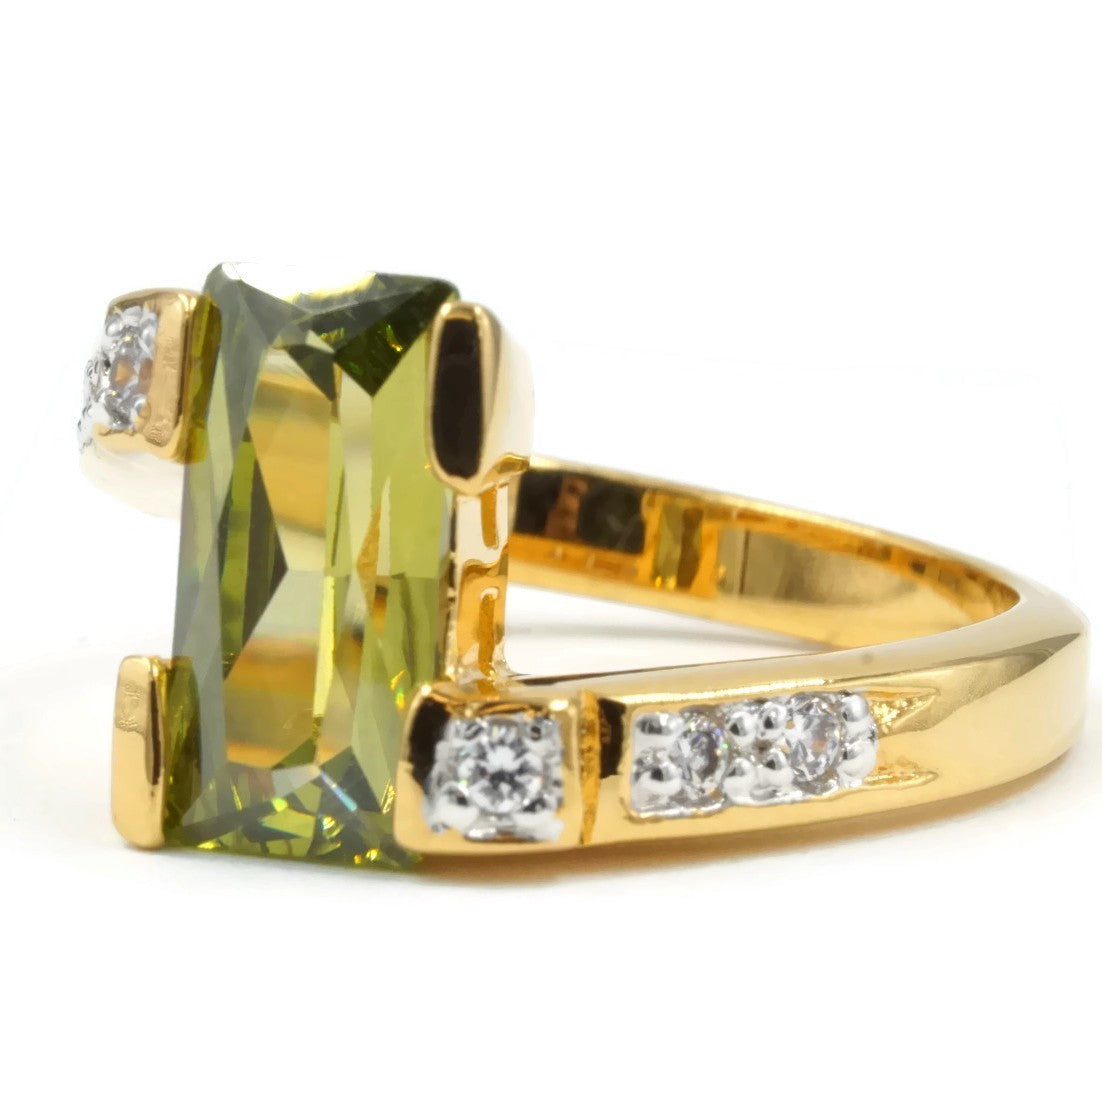 Special Rectangular Olivine Green Stone Statement Ring